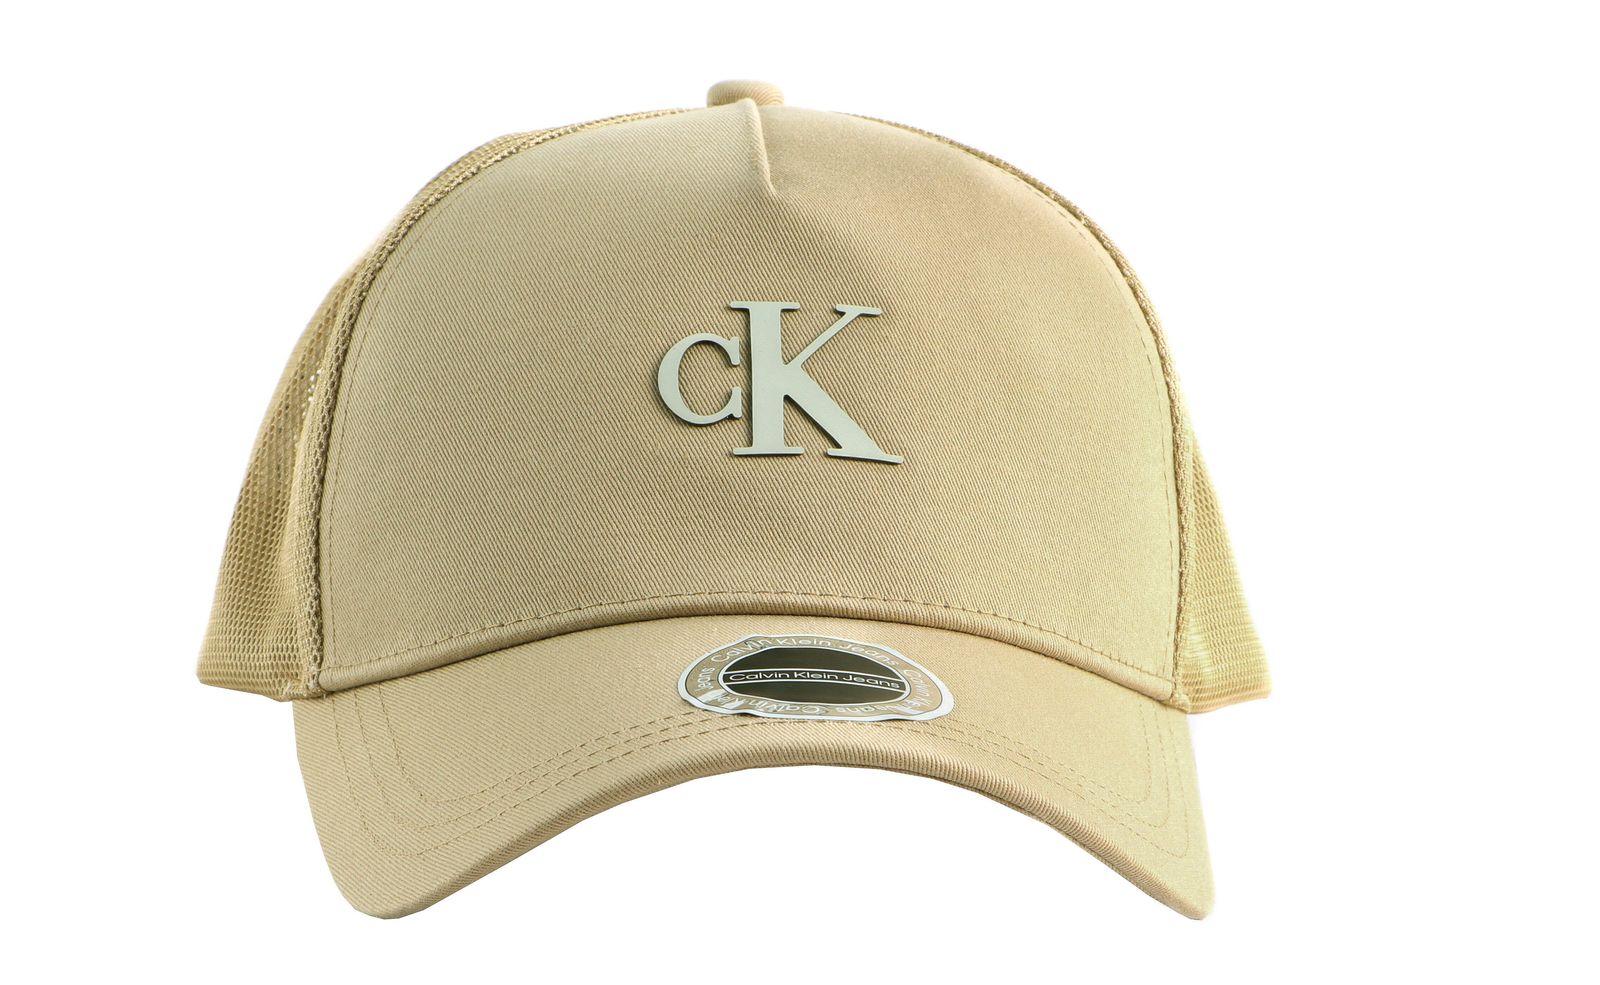 Calvin Klein cap online bags, Archive modeherz purses | CKJ | Trucker Travertine Cap accessories & Buy